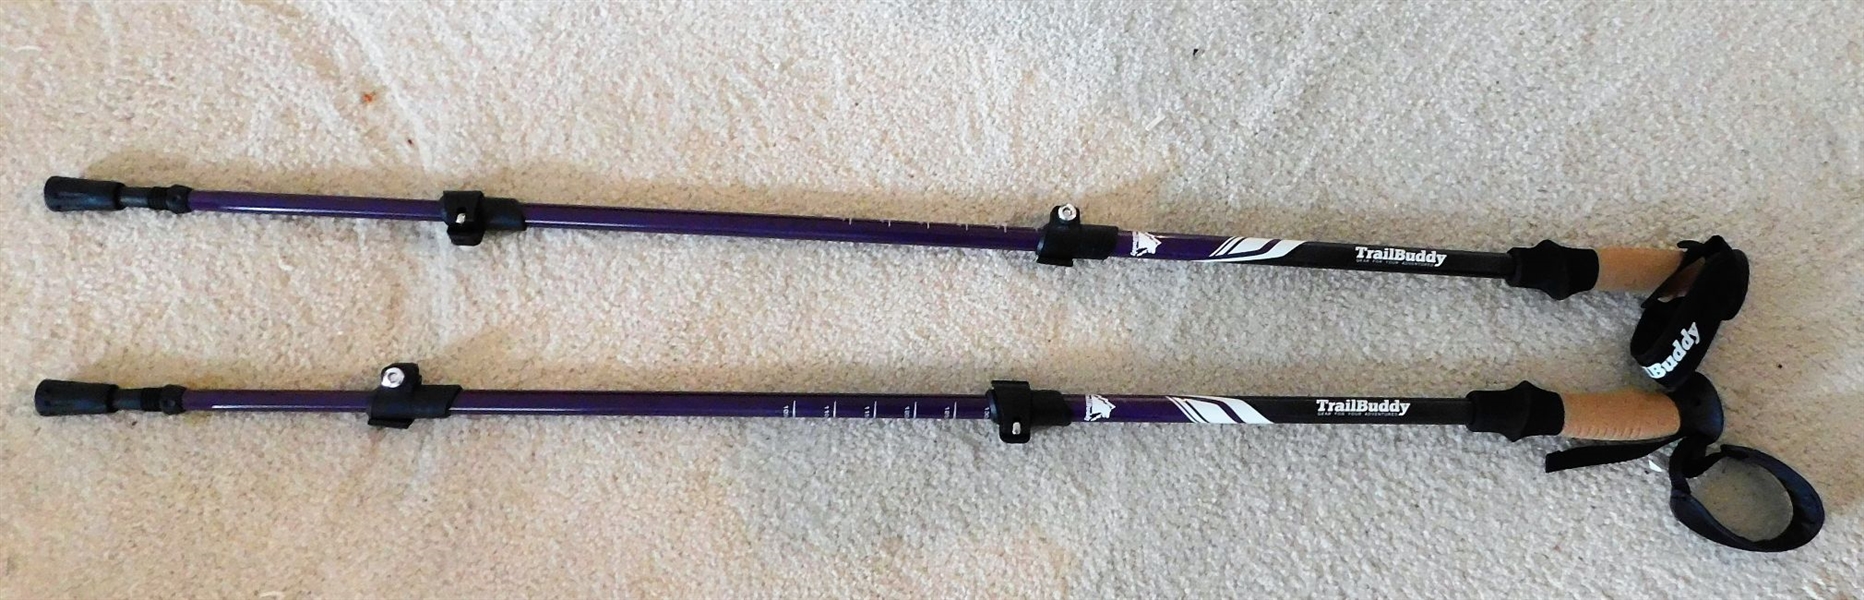 Pair of Trail Buddies Walking Sticks - Adjustable Height 